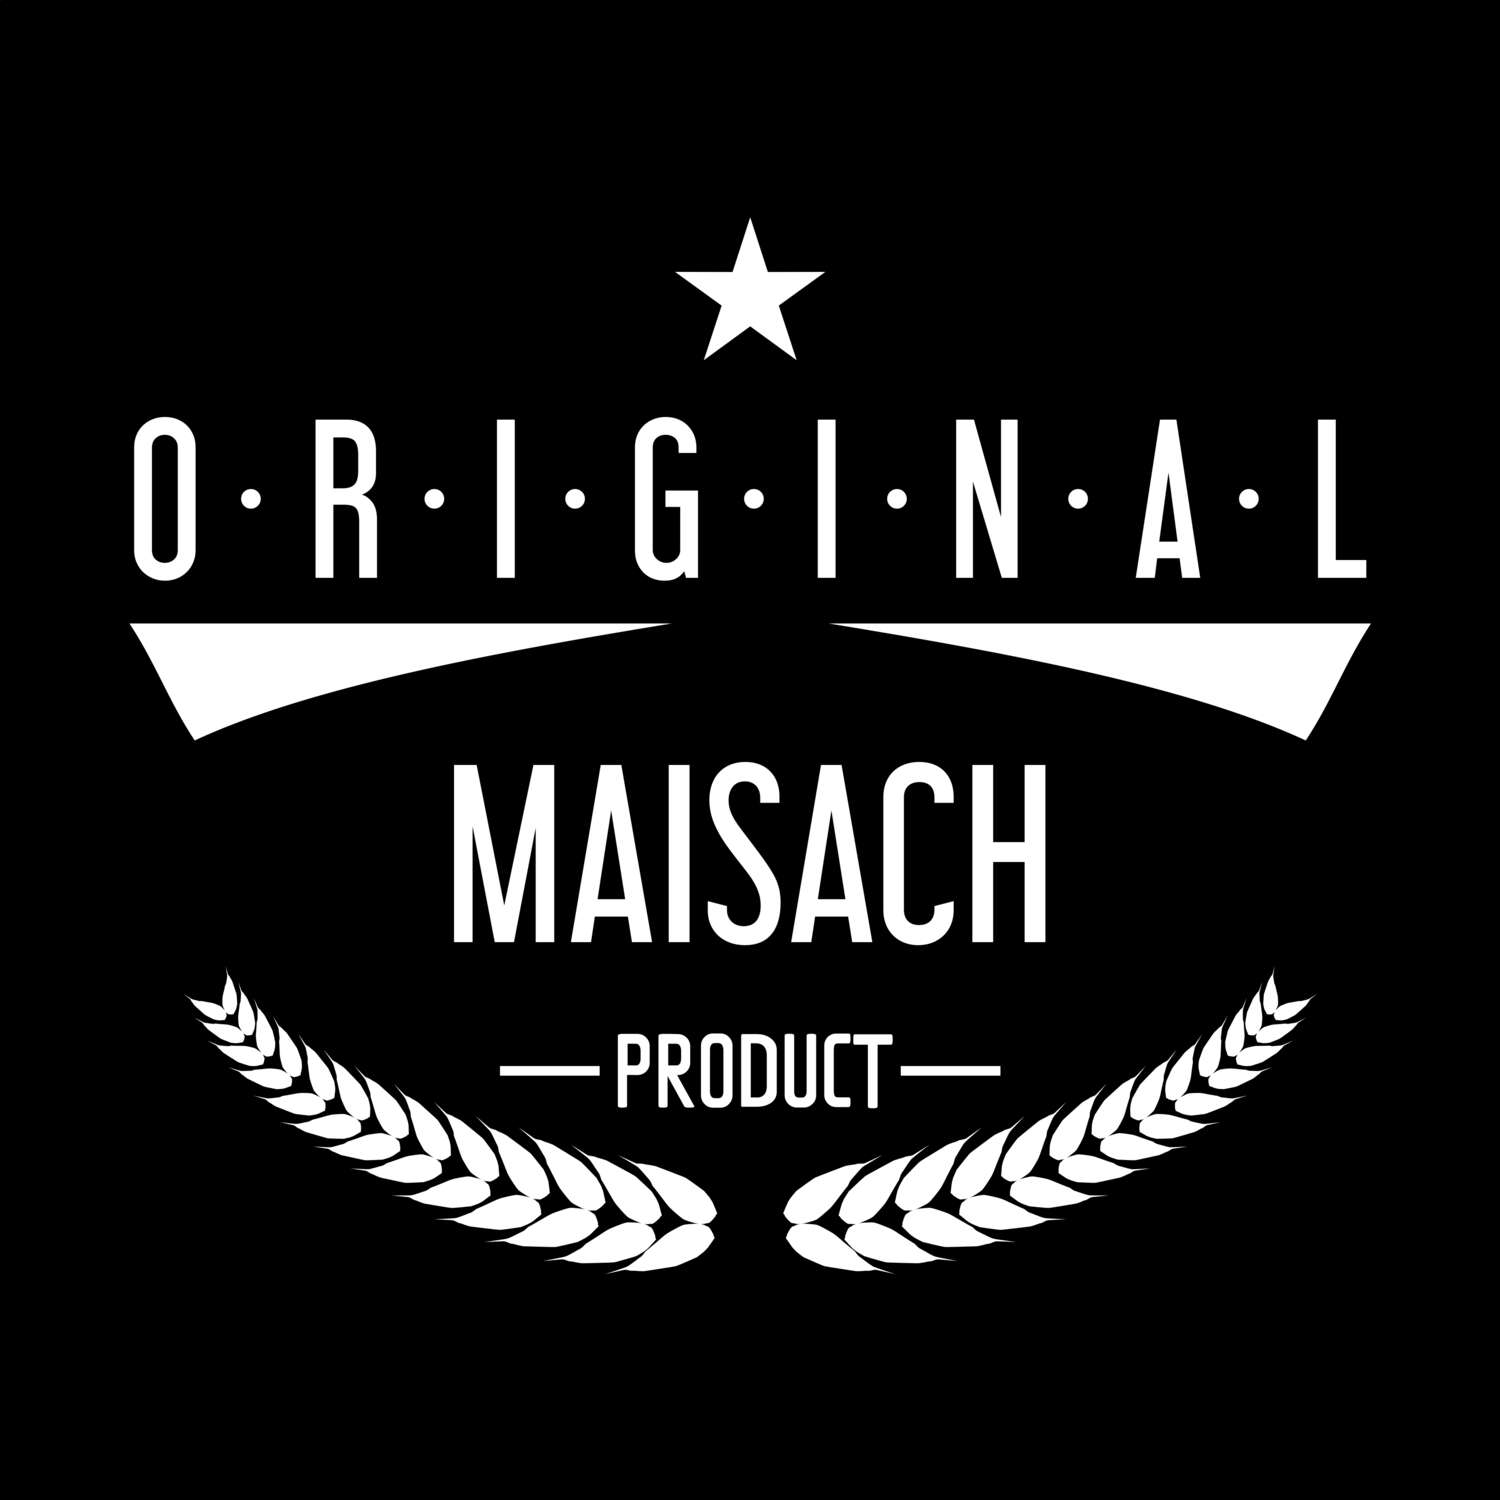 Maisach T-Shirt »Original Product«